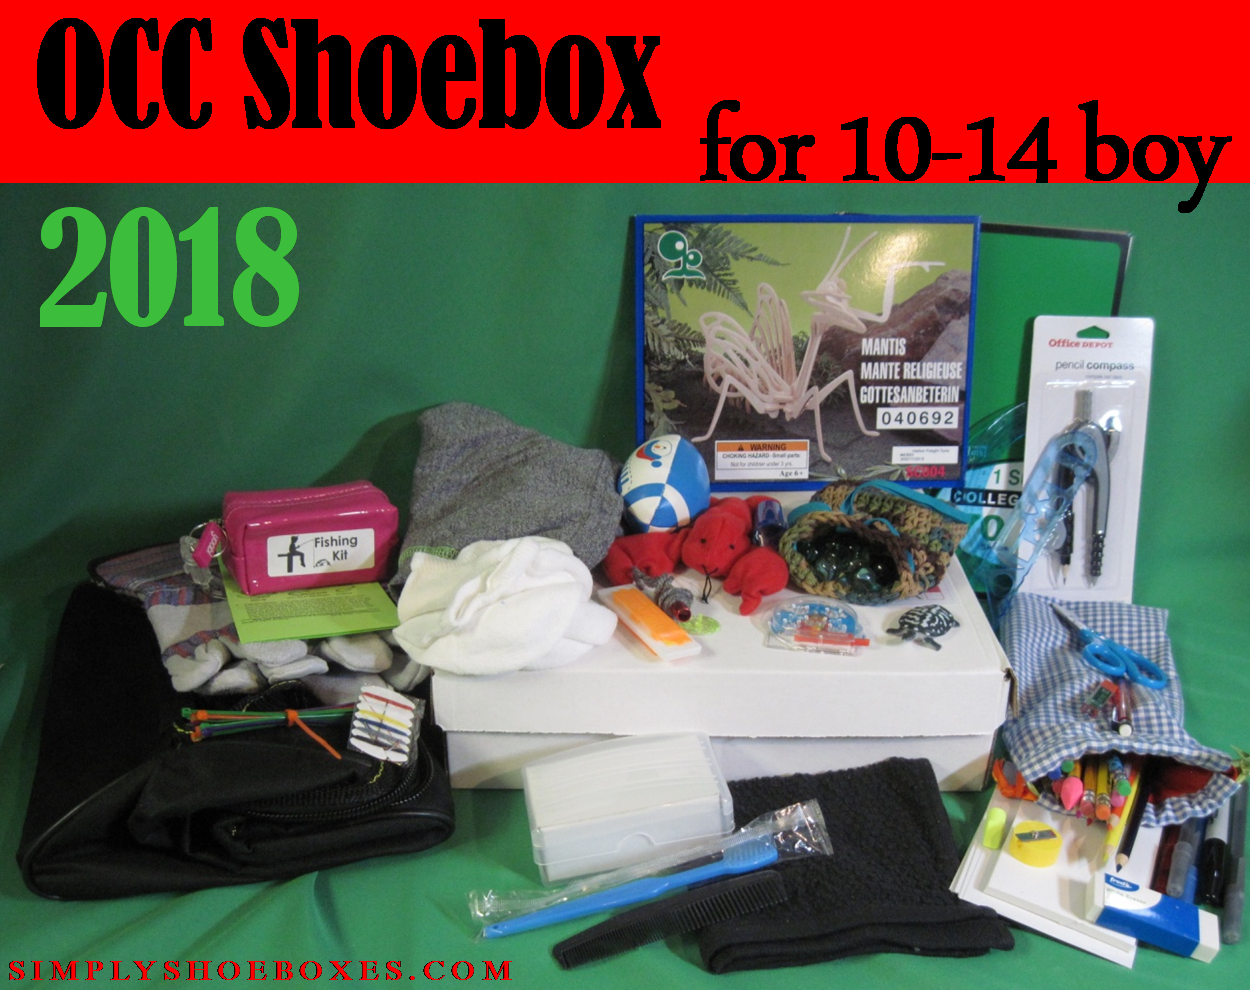 Simply Shoeboxes: Operation Christmas Child Shoebox for 10-14 Year Old Boy-  2018